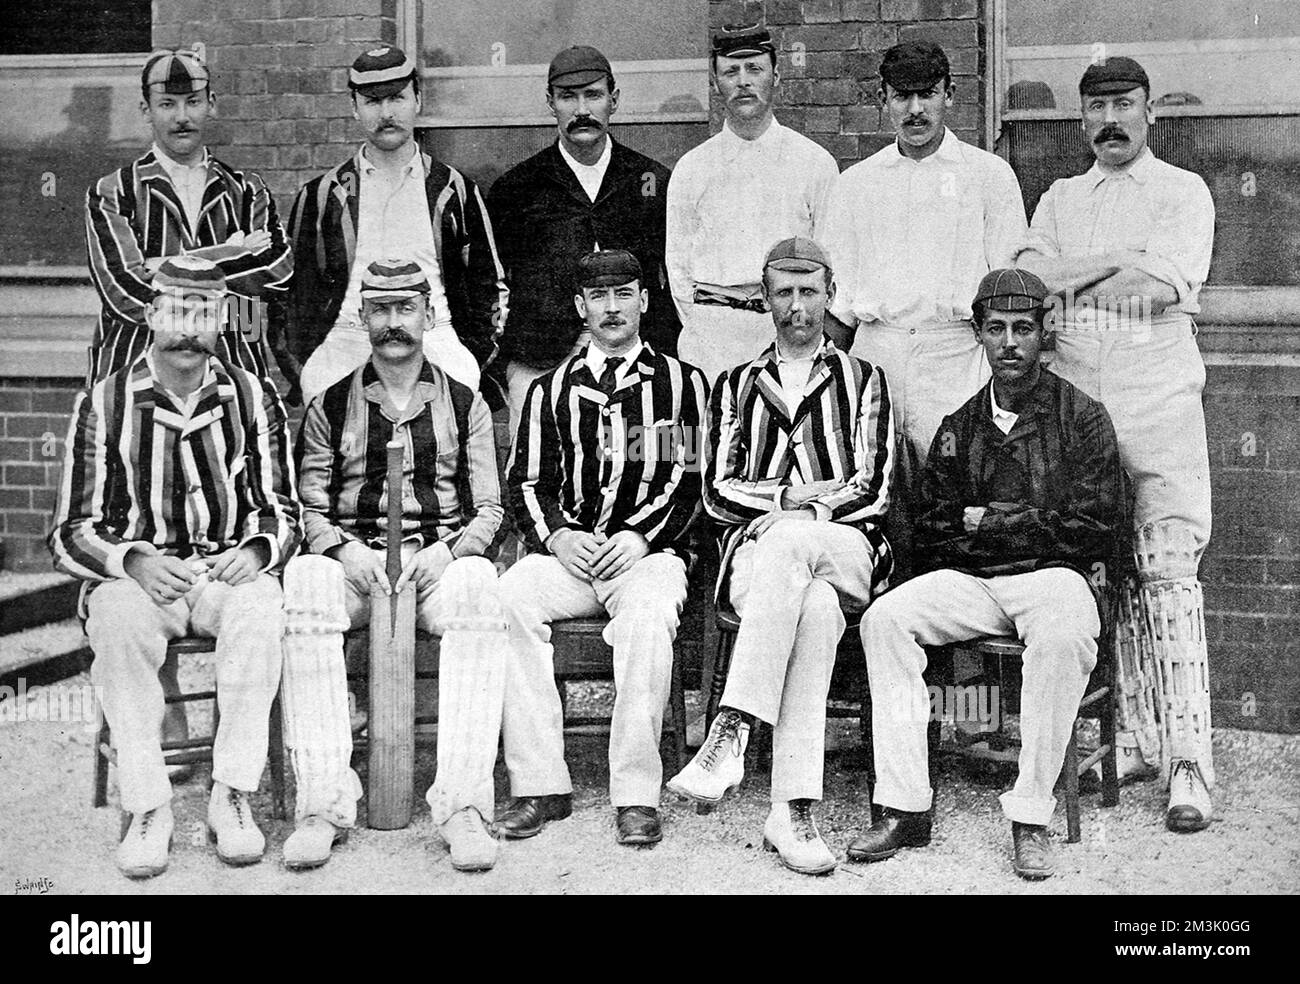 Fotografía del equipo de críquet del condado de Middlesex para la temporada 1892. Fila posterior, de izquierda a derecha: R.S. Lucas, T.C. O'Brien, Phillips, West, Hearne, Rawlin. Primera fila, de izquierda a derecha: A.E. Stoddart, S.W. Scott, A.J. Webbe (capitán), E.A. Nepean, P.J.T. Henery. Foto de stock